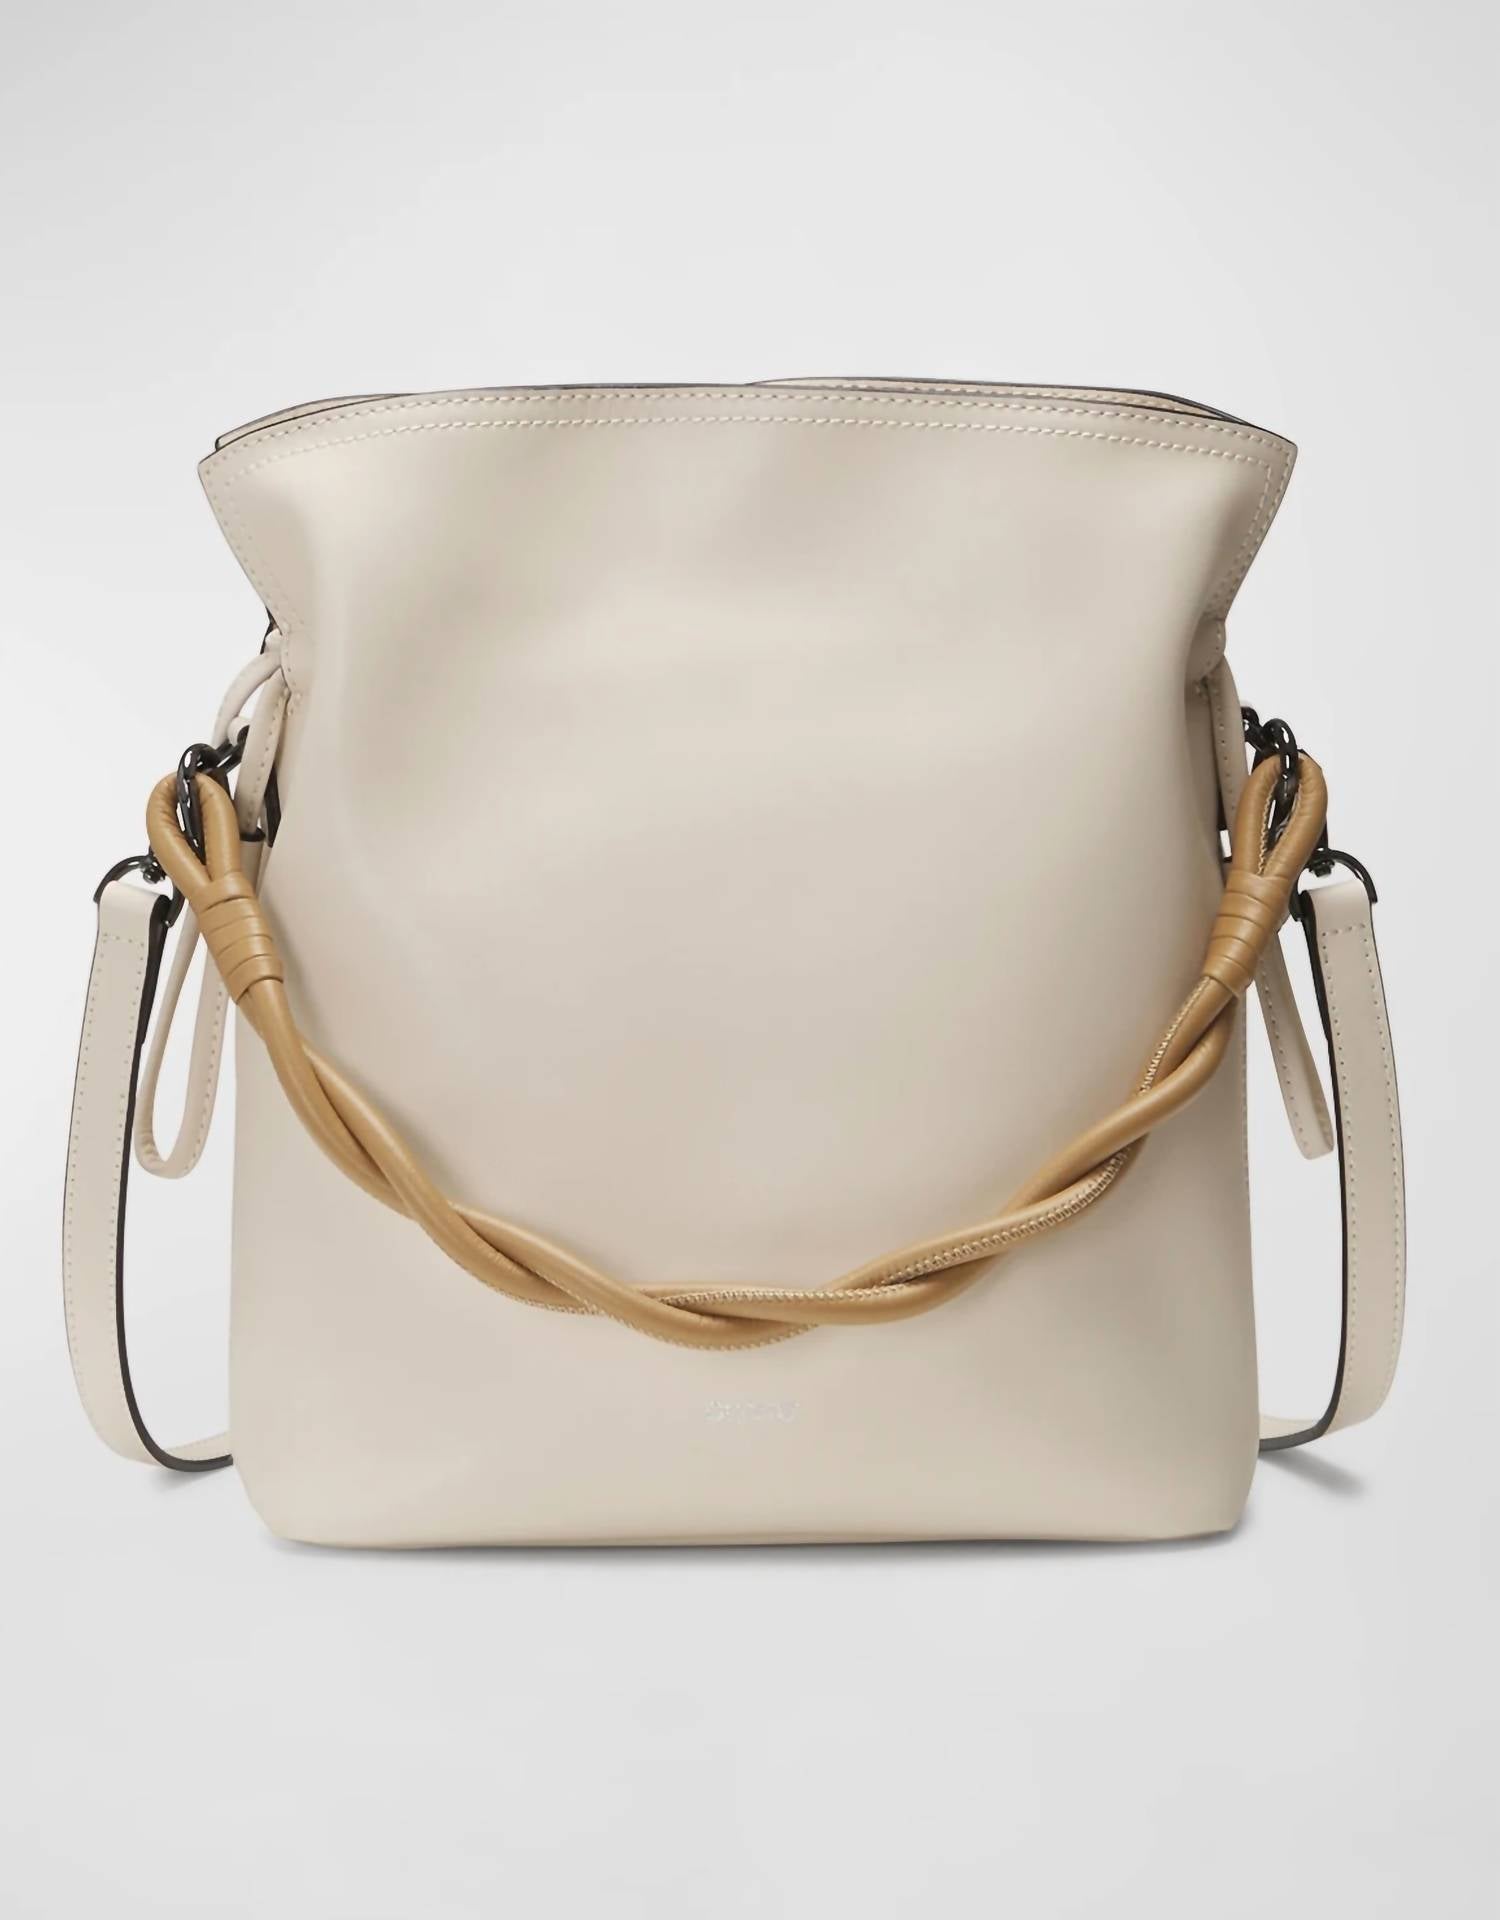 ORYANY Madeleine Bucket Bag in Vanilla Cream